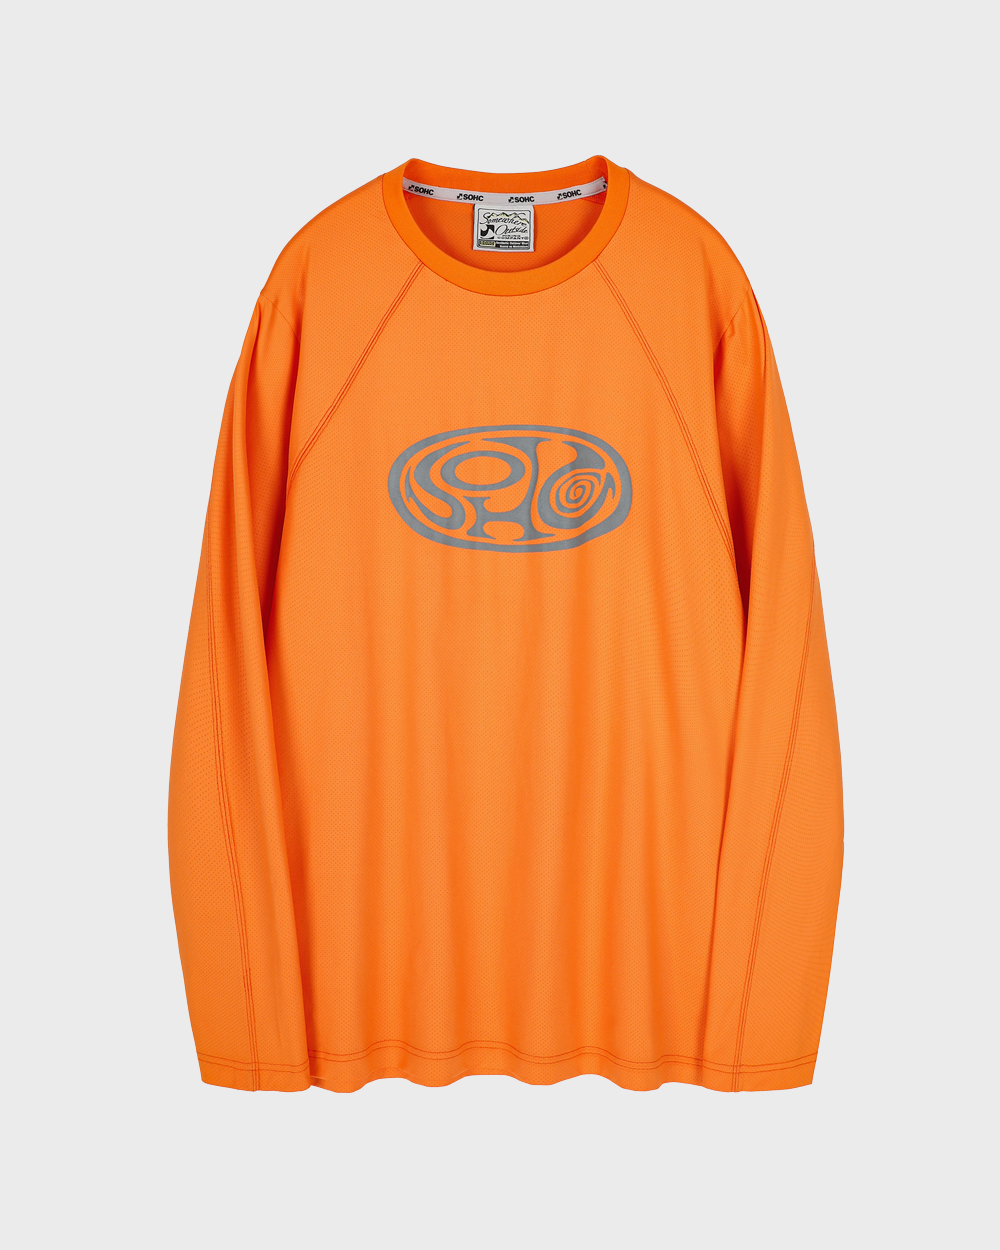 Hatching Egg SOHC Reflective Print T Shirt (Orange)